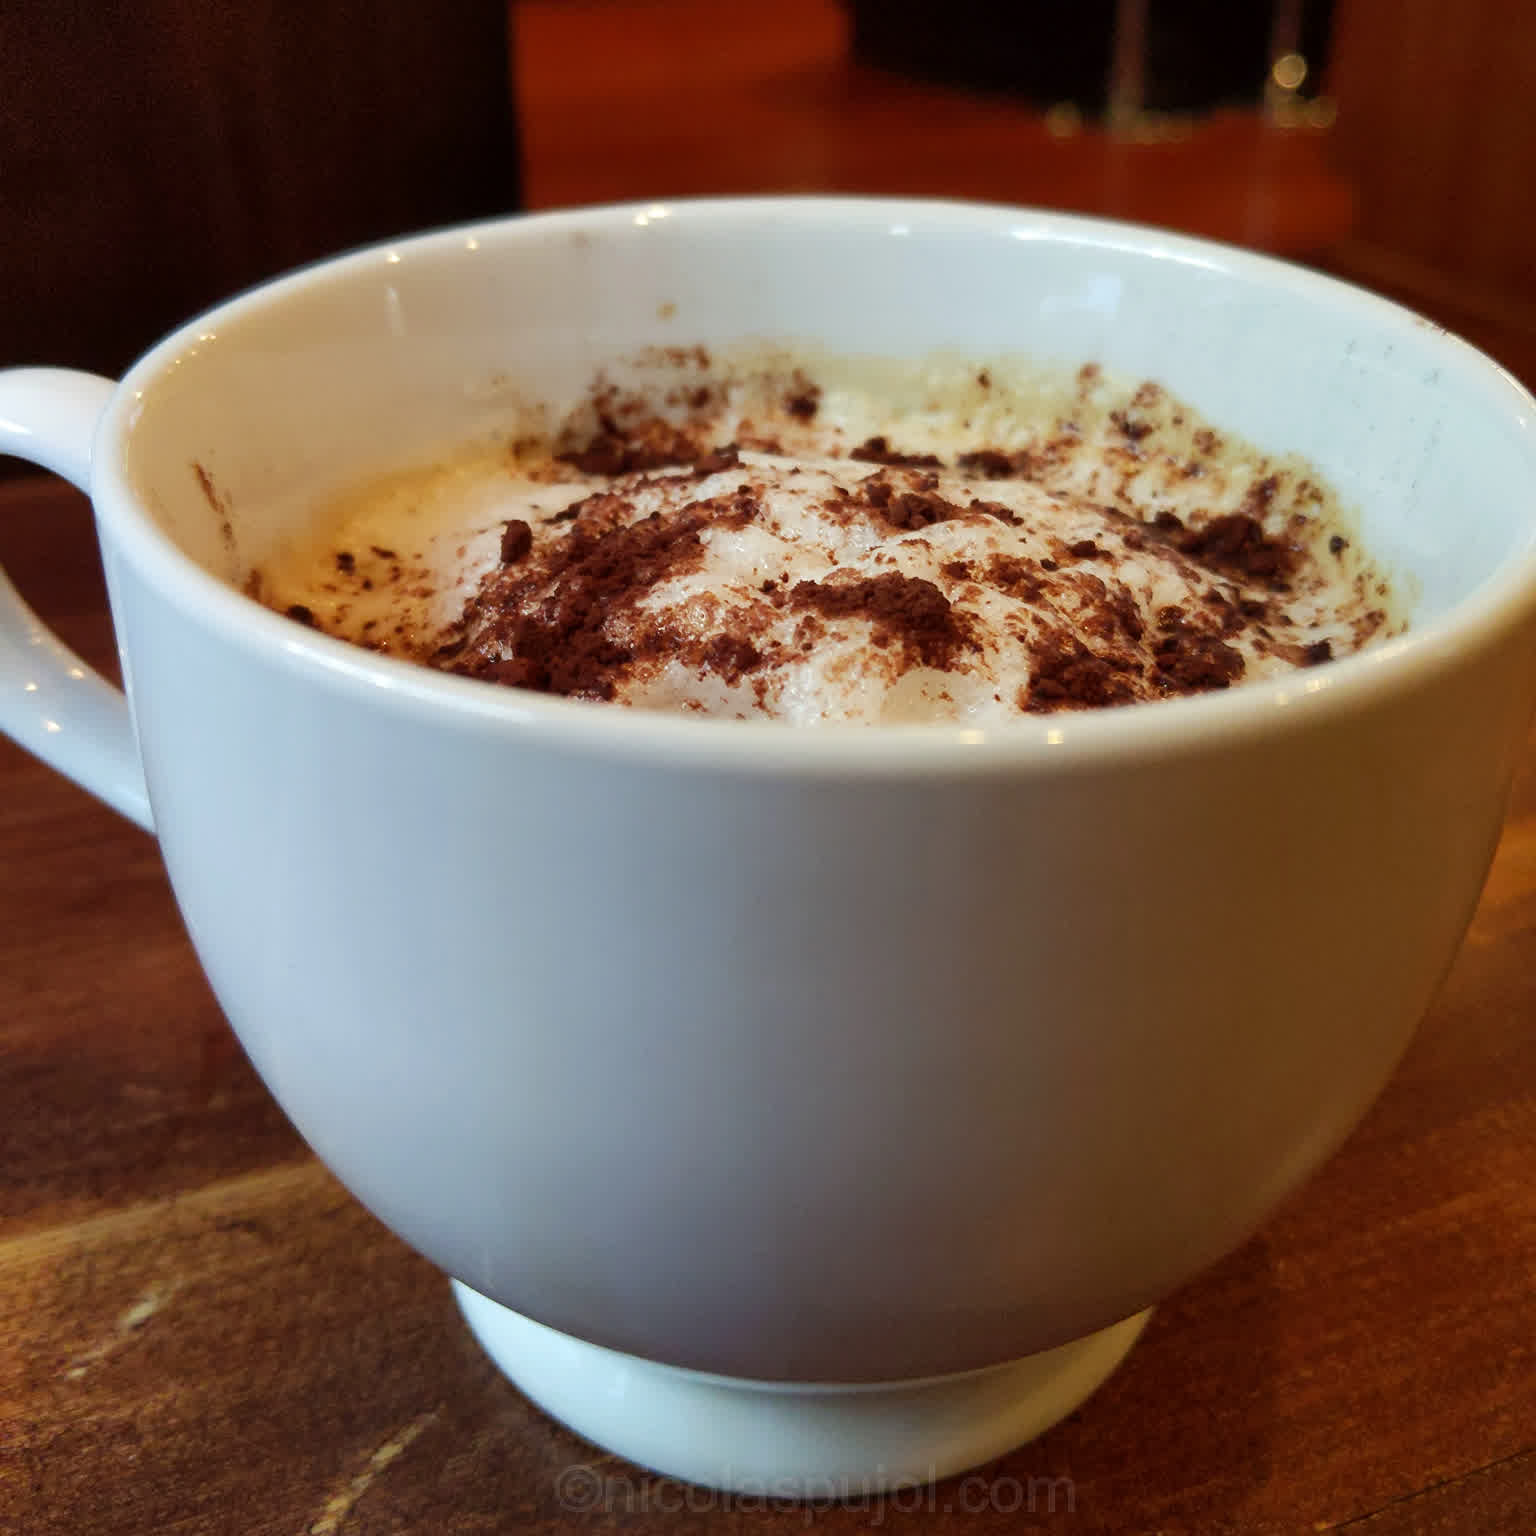 https://www.nicolaspujol.com/wp-content/uploads/2019/02/Vegan-cappuccino-coffee-with-unsweetened-cocoa-powder.jpg